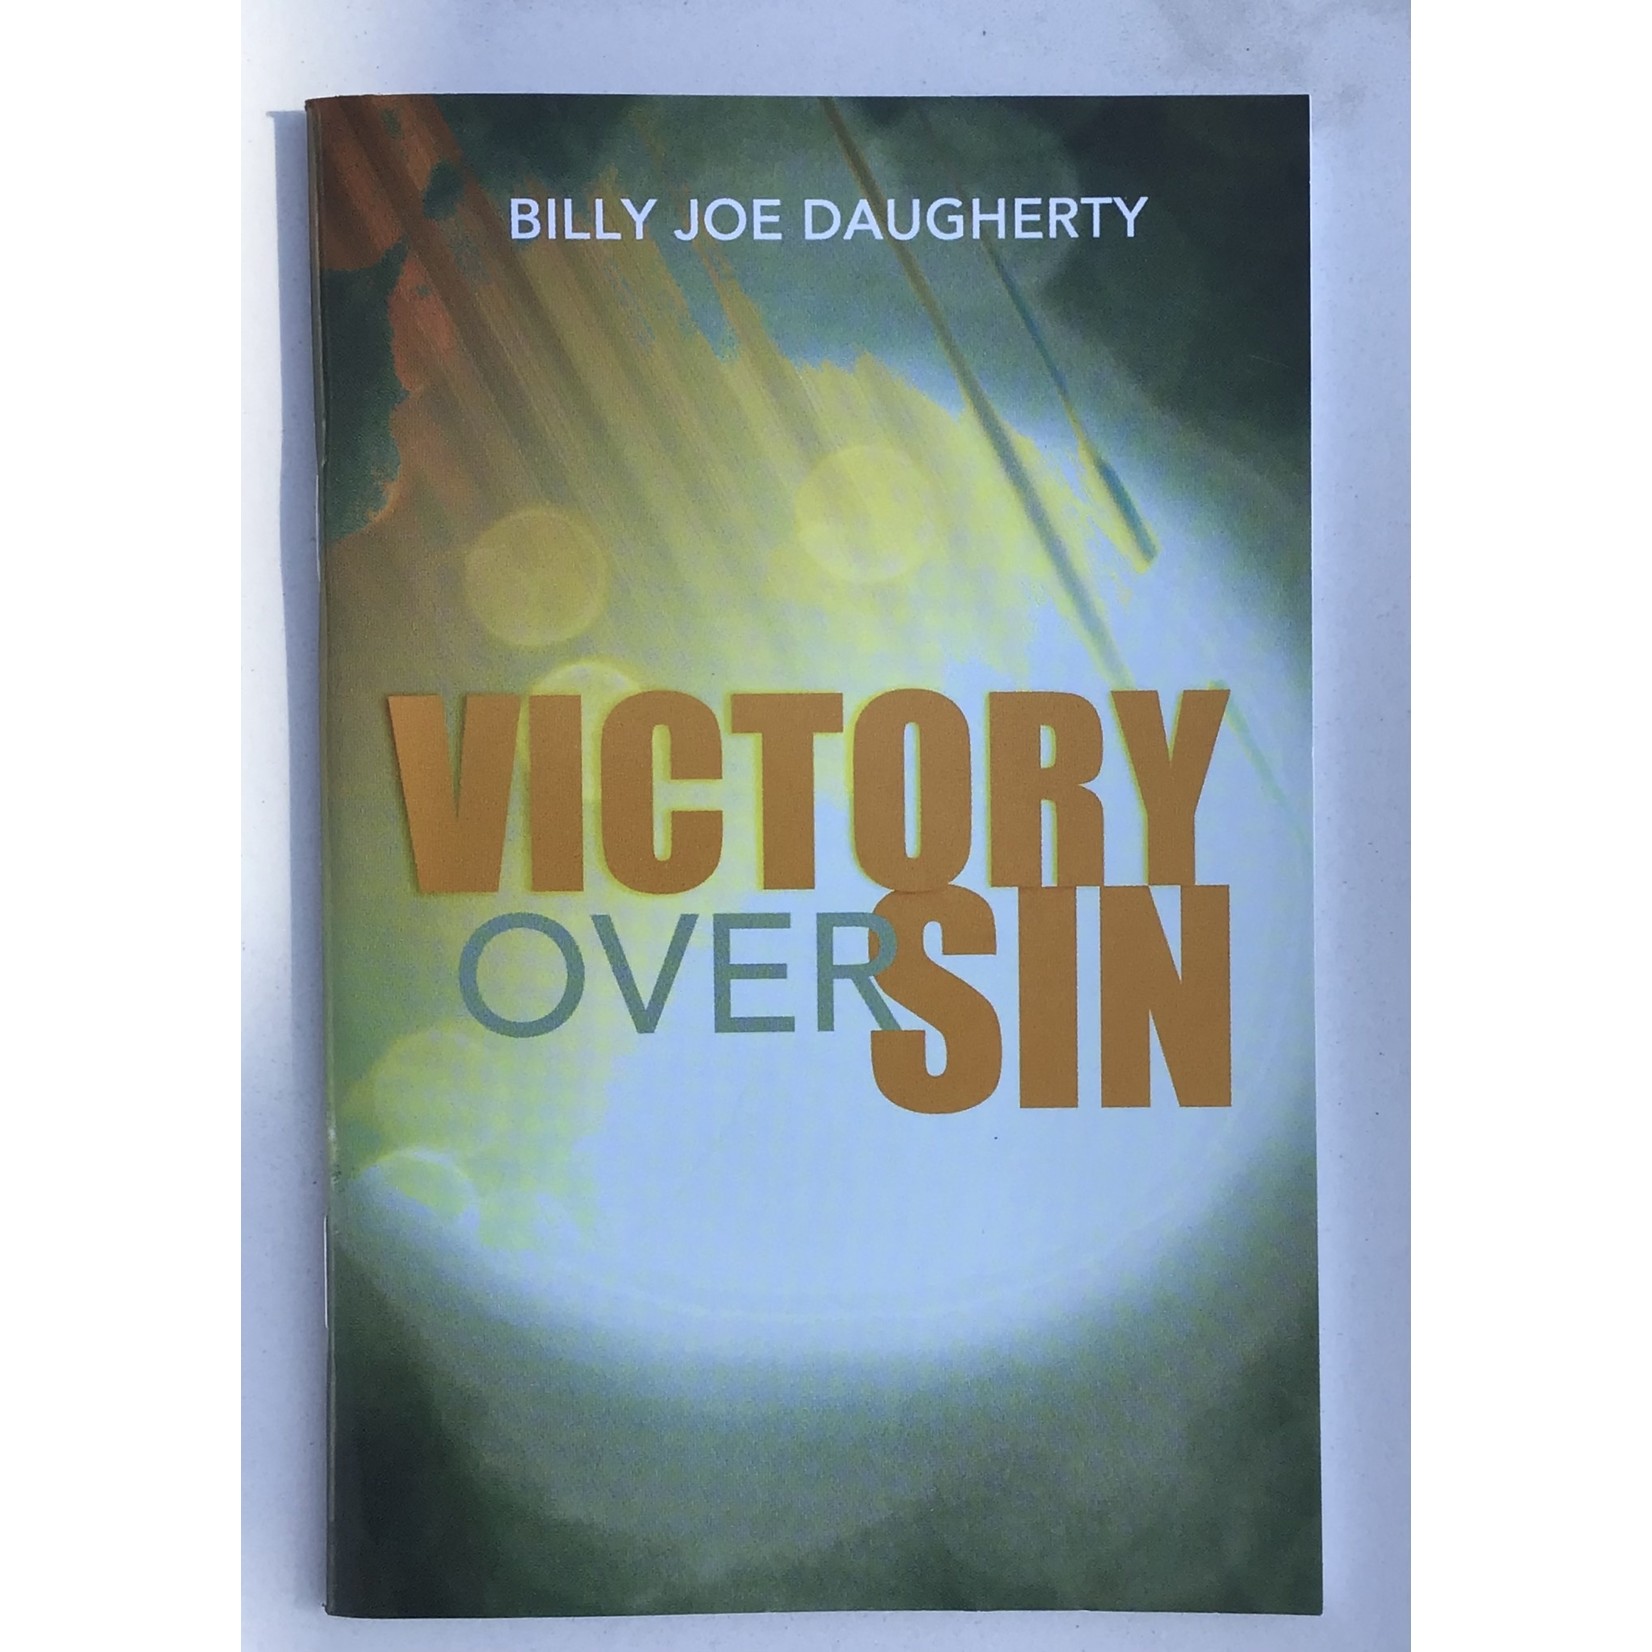 Victory Over Sin - Daugherty, Billy Joe